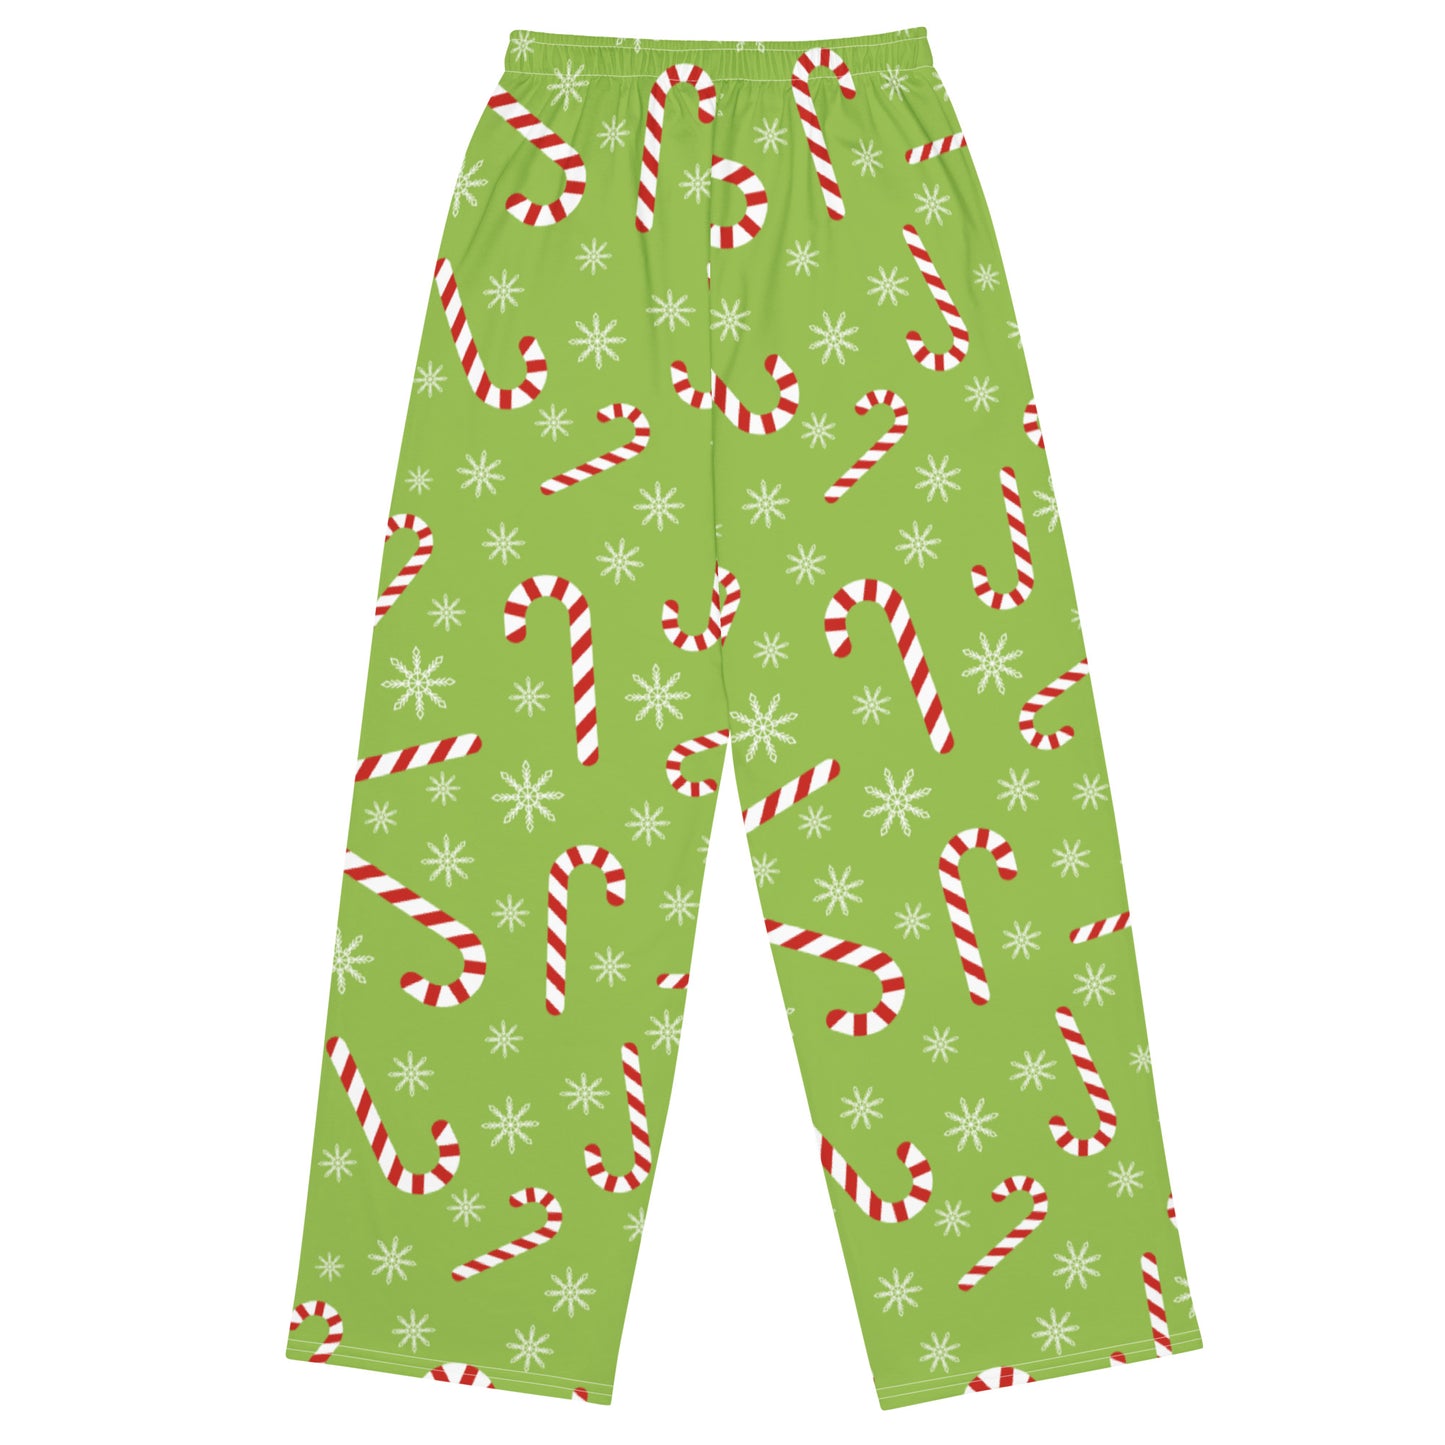 Candy Cane Lounge Pants with Pockets, Holiday Christmas Unisex Men Women Wide Leg Sweatpants PJ Pajamas Plus Size Drawstring Yoga Starcove Fashion